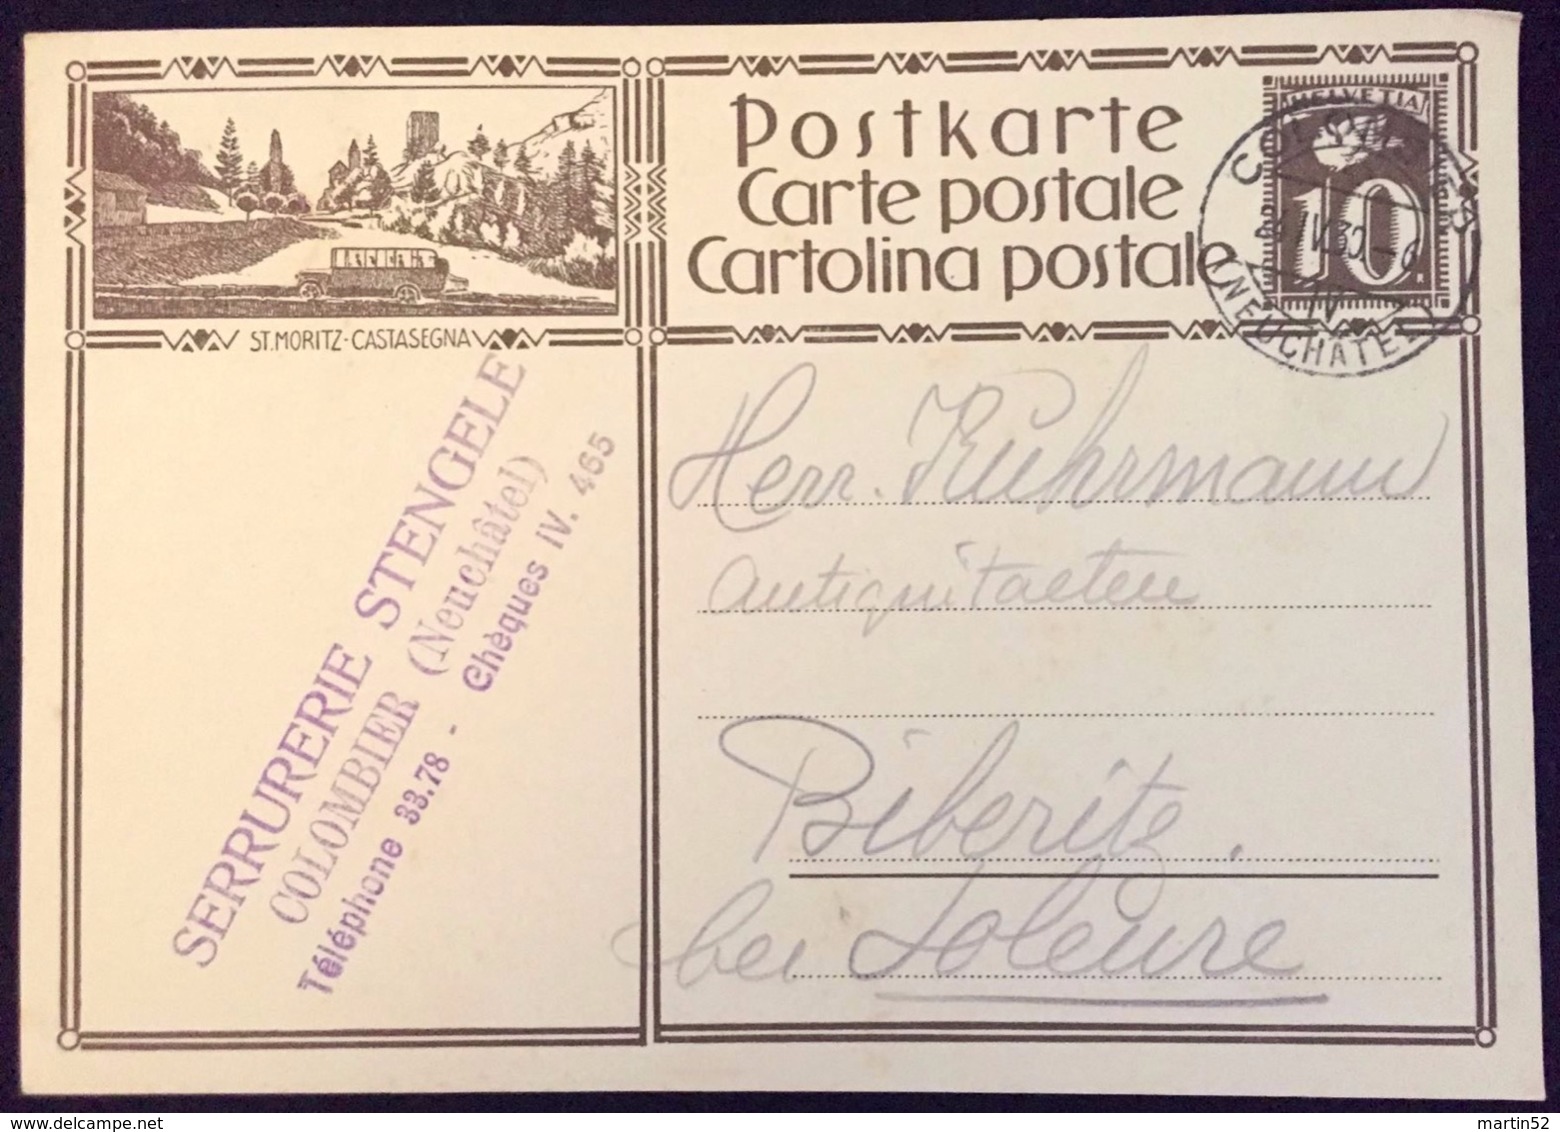 Schweiz Suisse 1930: Bild-PK / CPI "ST.MORITZ - CASTASEGNA" Mit O COLOMBIER 24.IV.30 Nach Biberist (SO) - Busses